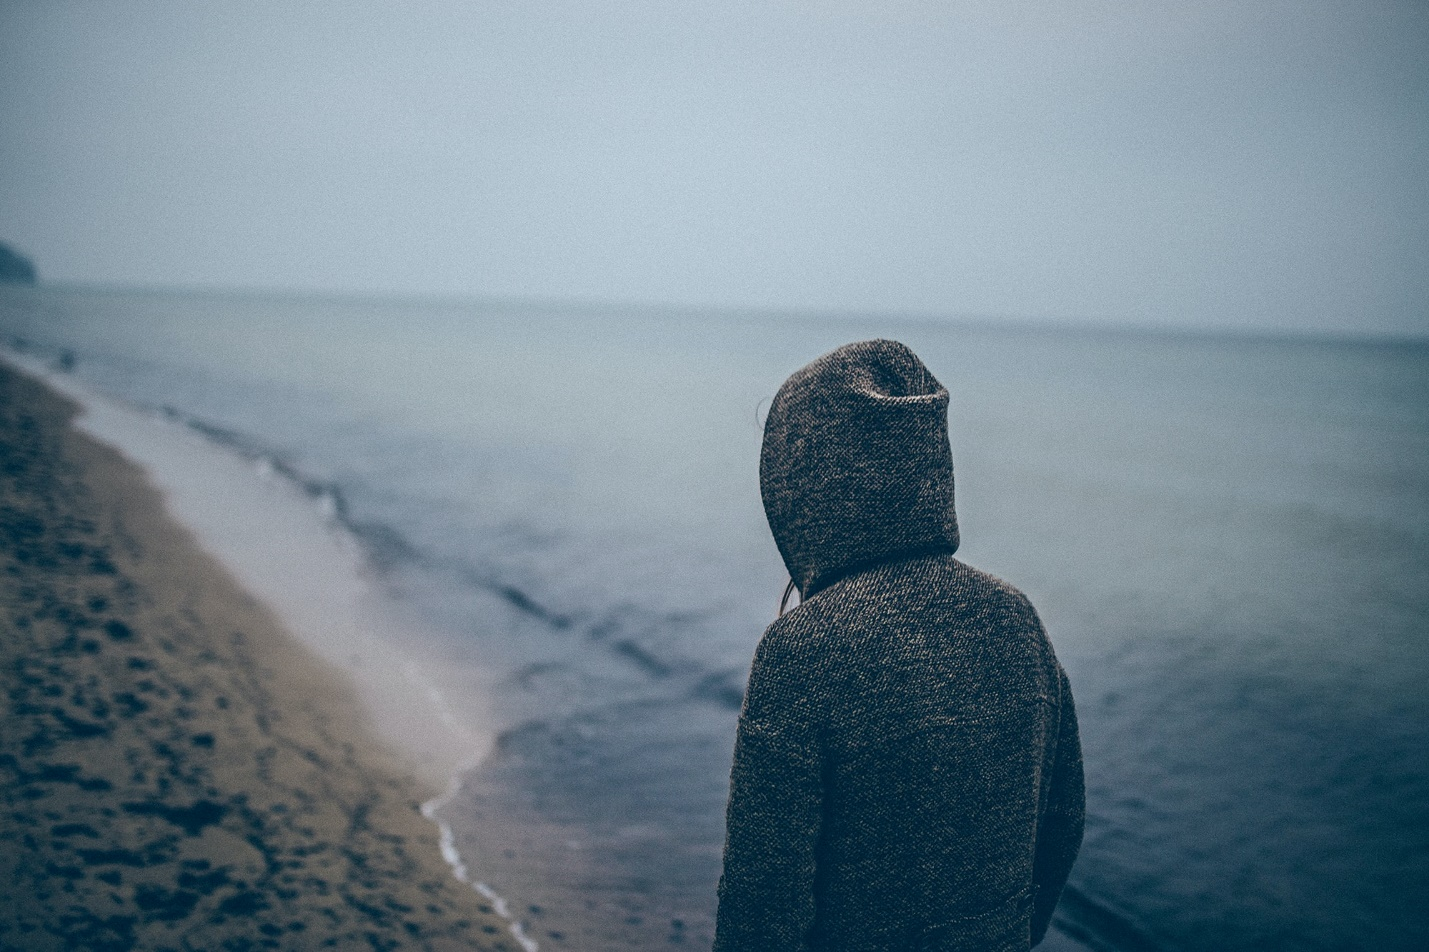 A hooded individual walks along an empty beach